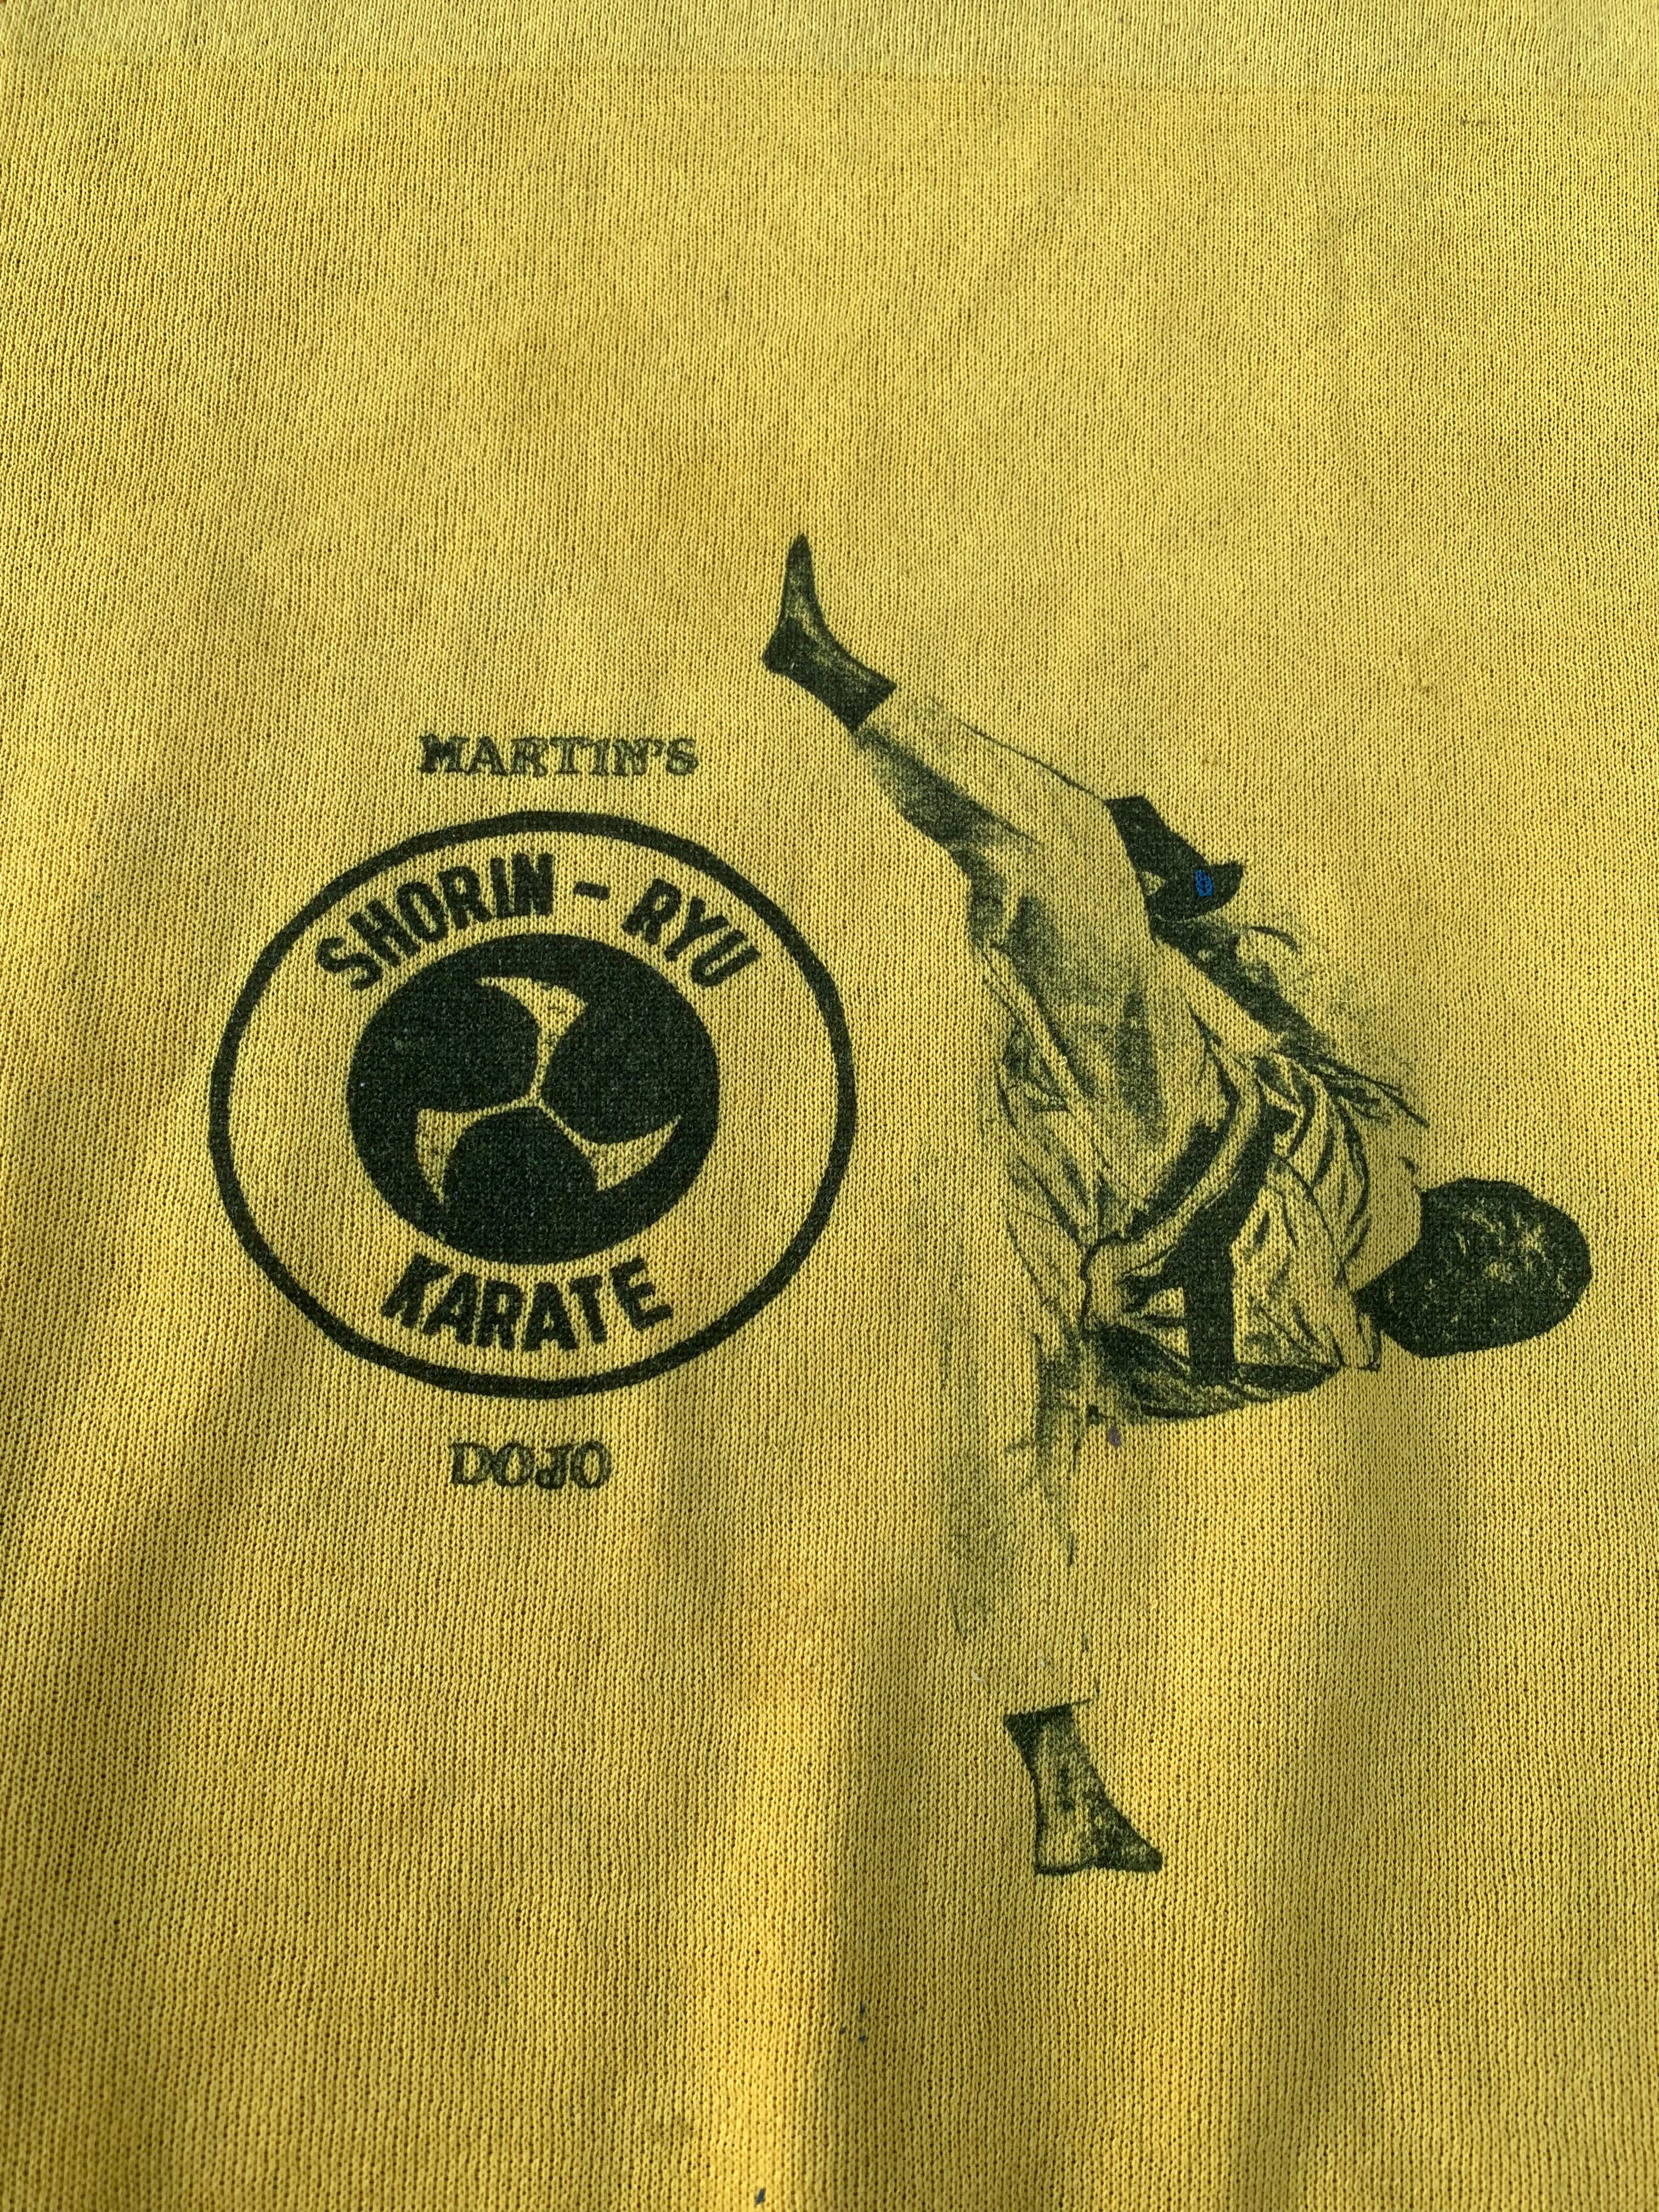 1970s Karate Dojo Raglan Crewneck - Faded Yellow - M